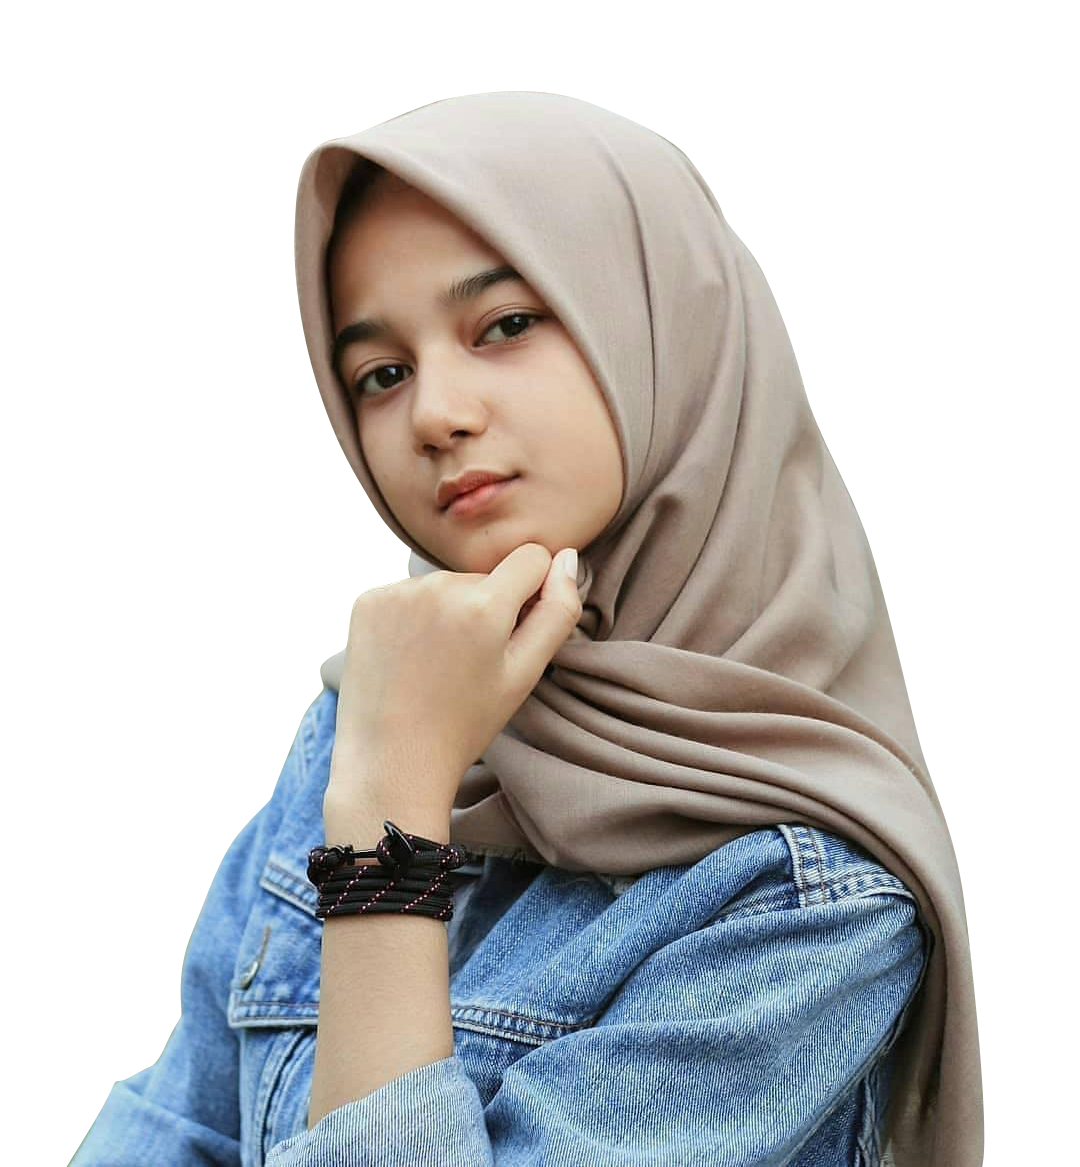 Download 520+ Wallpaper Hijab Cantik Hd HD Paling Keren ...